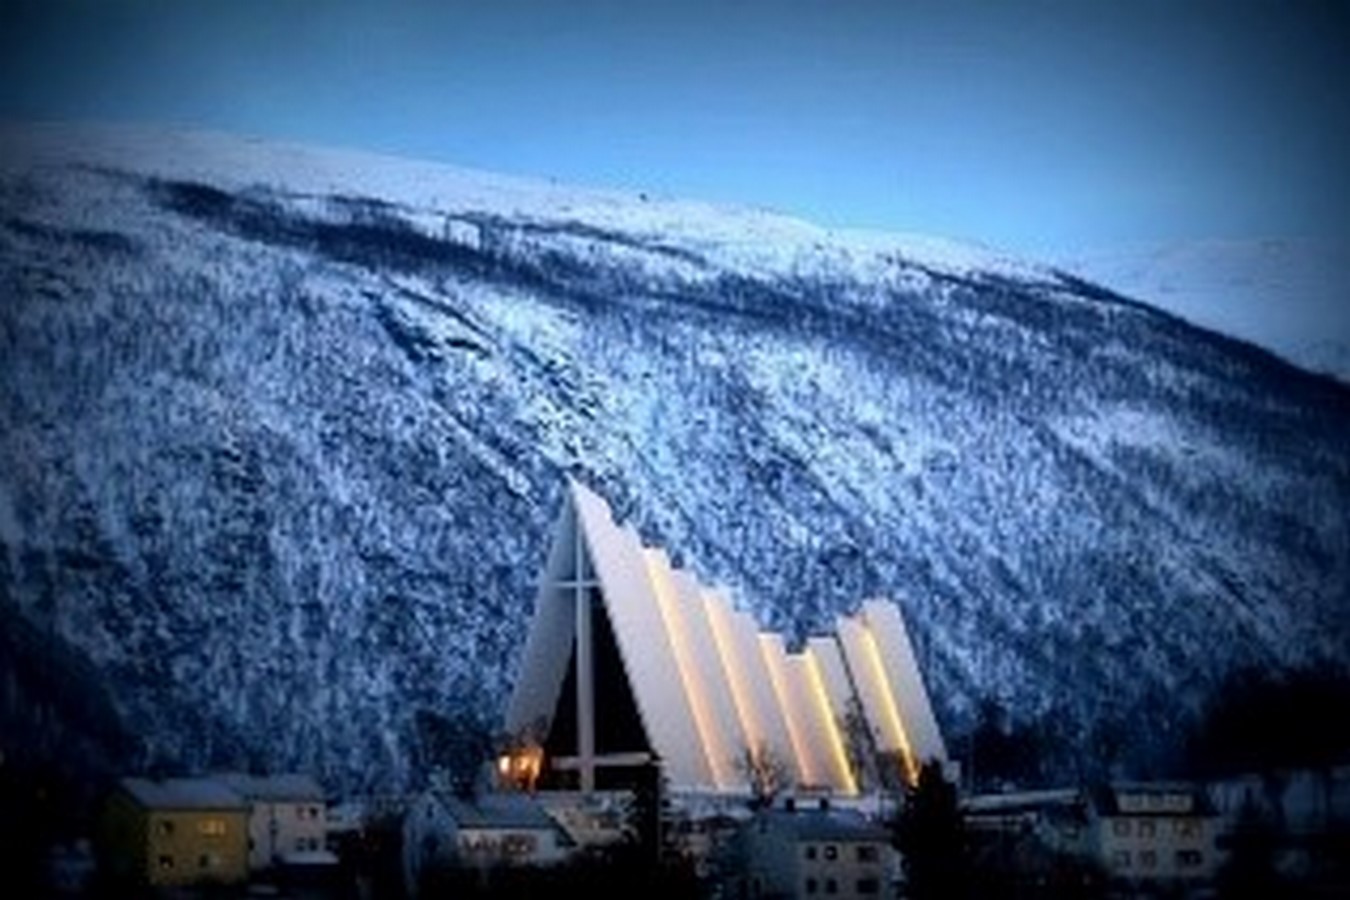 Arctic Cathedral or Tromsdalen Church, Tromsø - Sheet2